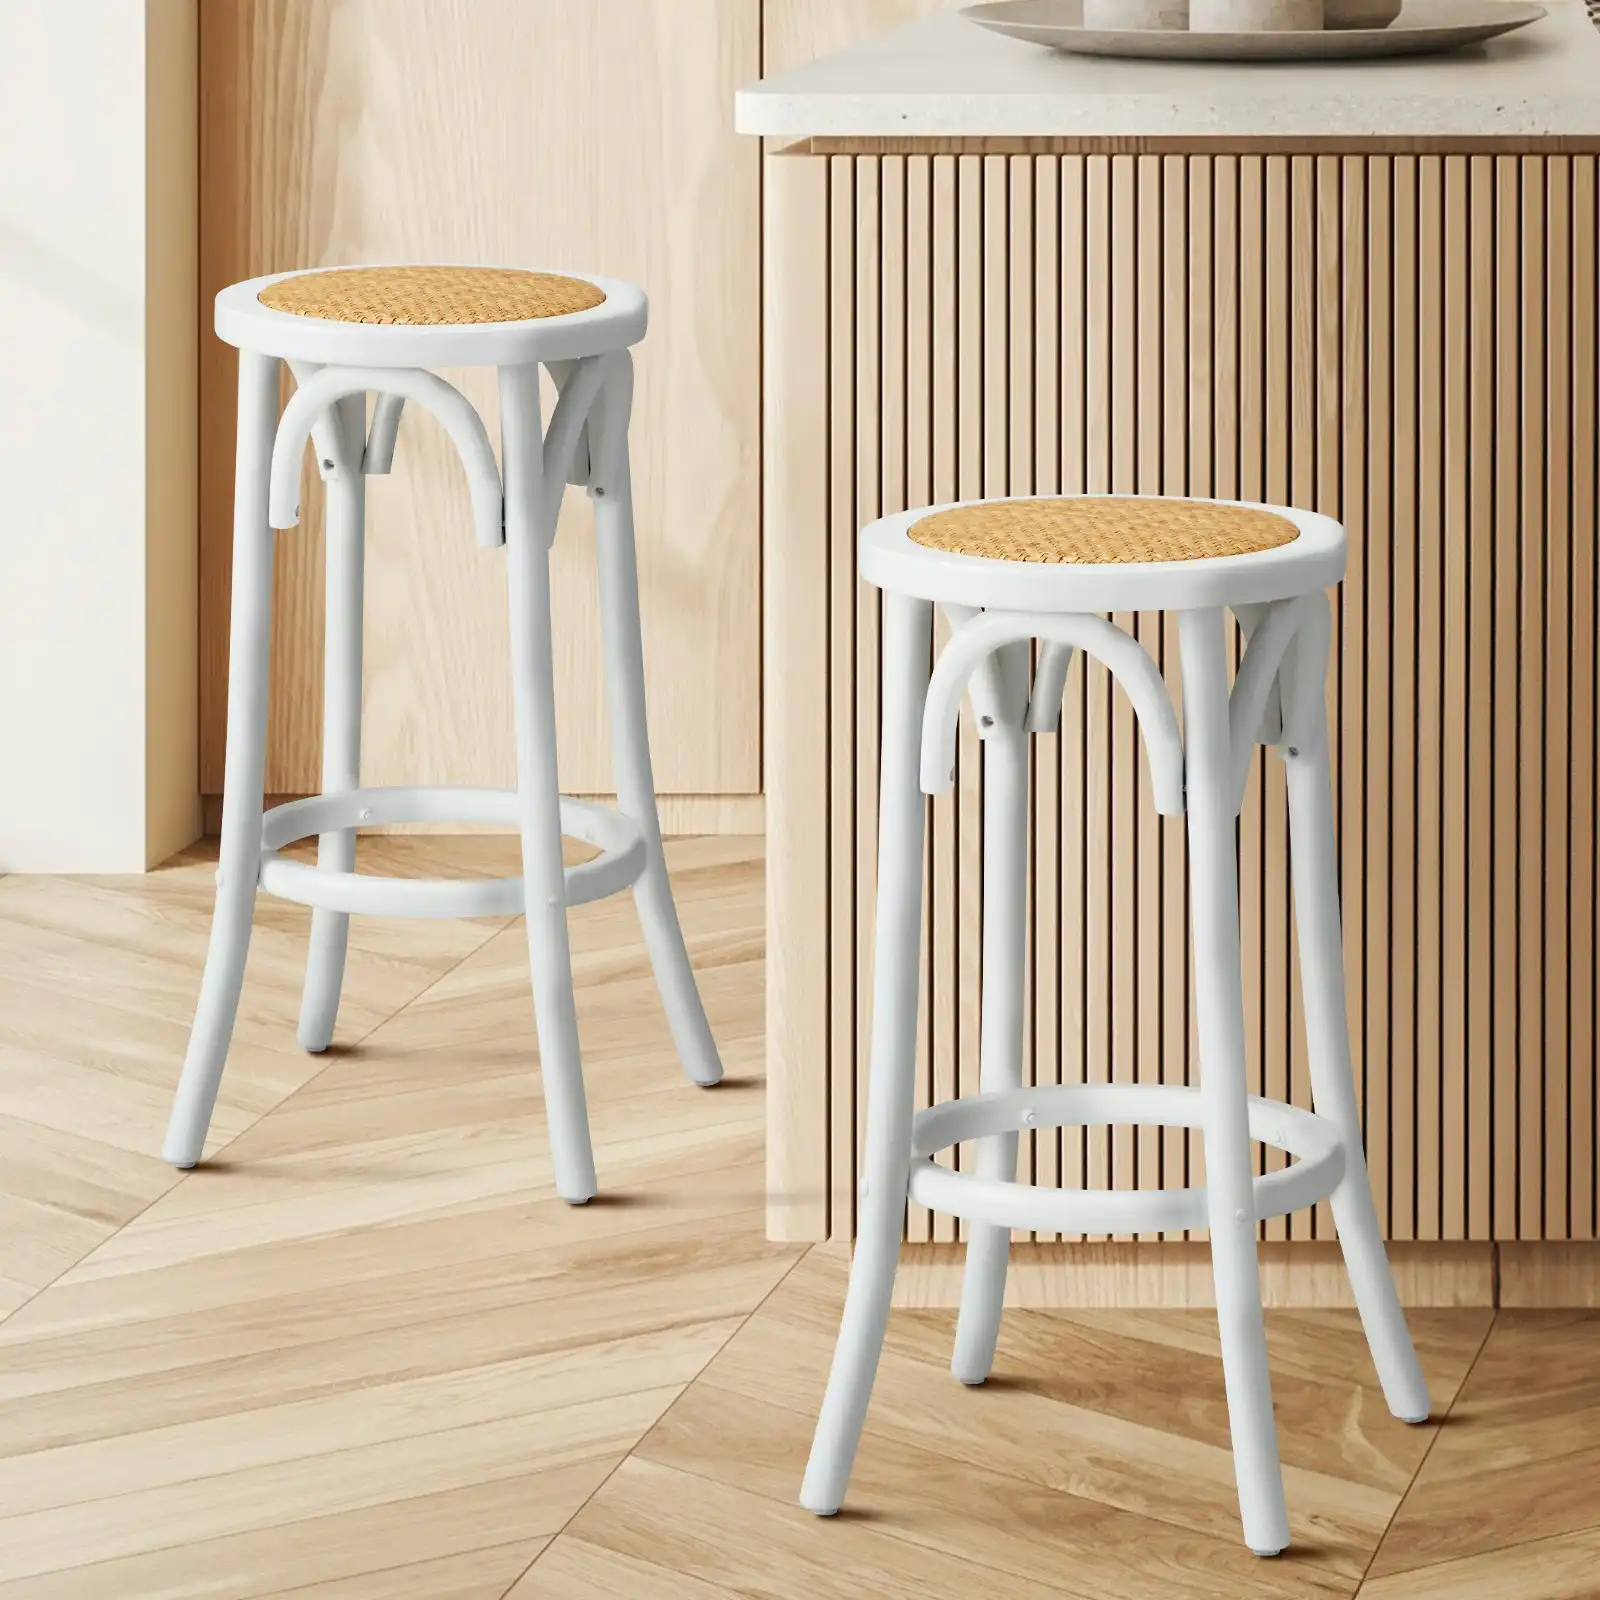 Oikiture 2x Bar Stools Kitchen Vintage Dining Chair Rattan Seat White